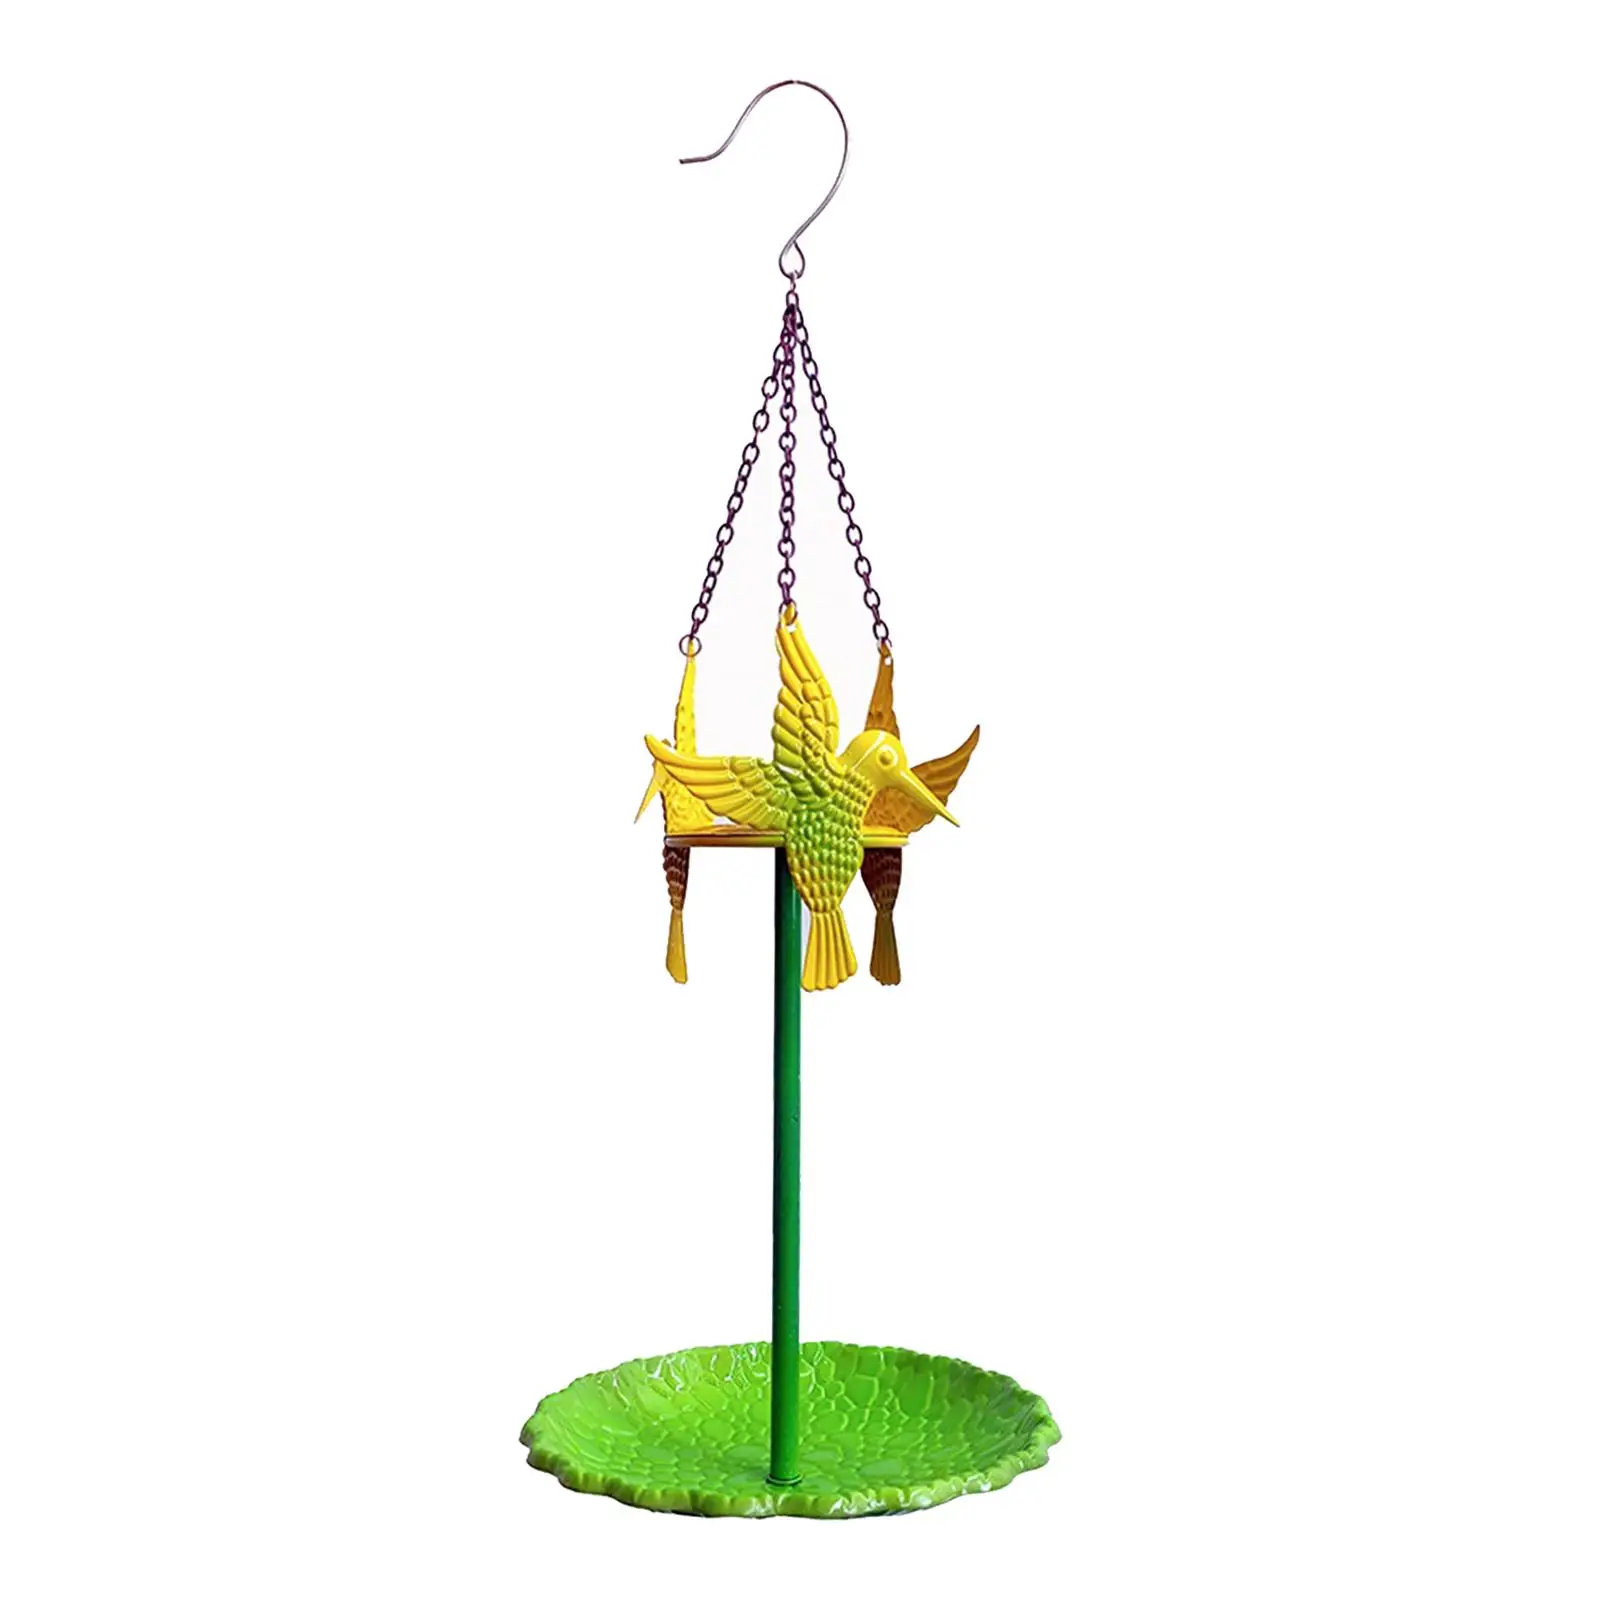 Metal Hanging Bird Feeder Platform with Chains Tray Pet Supplies for Backyard Outdoor Yard Garden Decor